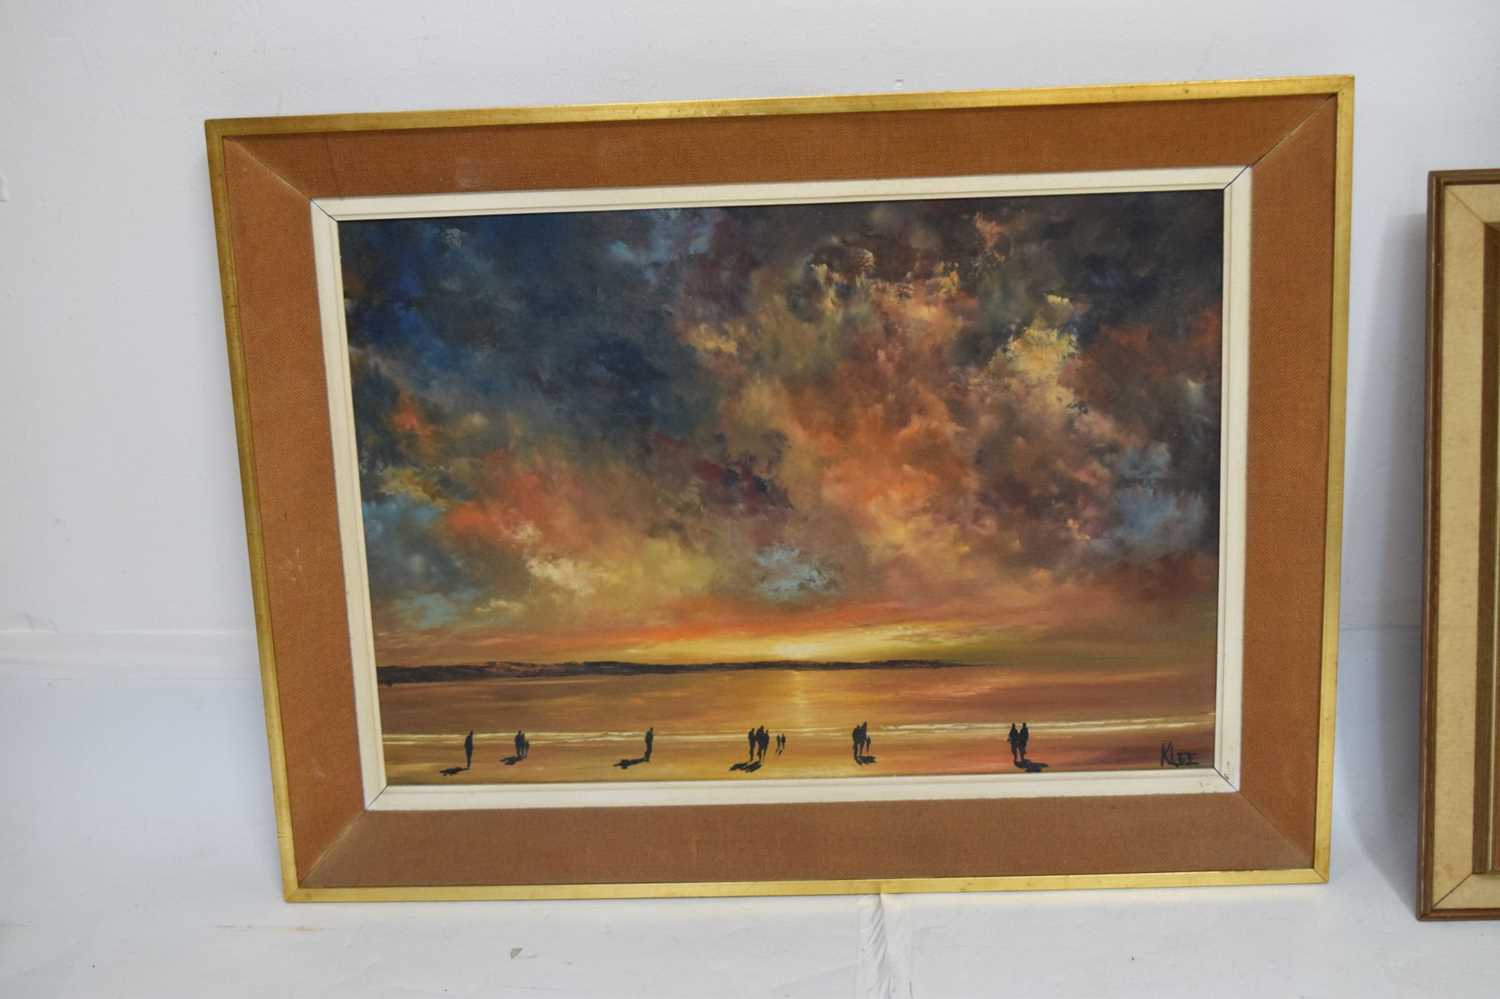 Raymond Klee, (1925-2013) - oil on board - Coastal scene with figures at sunset - Image 9 of 9